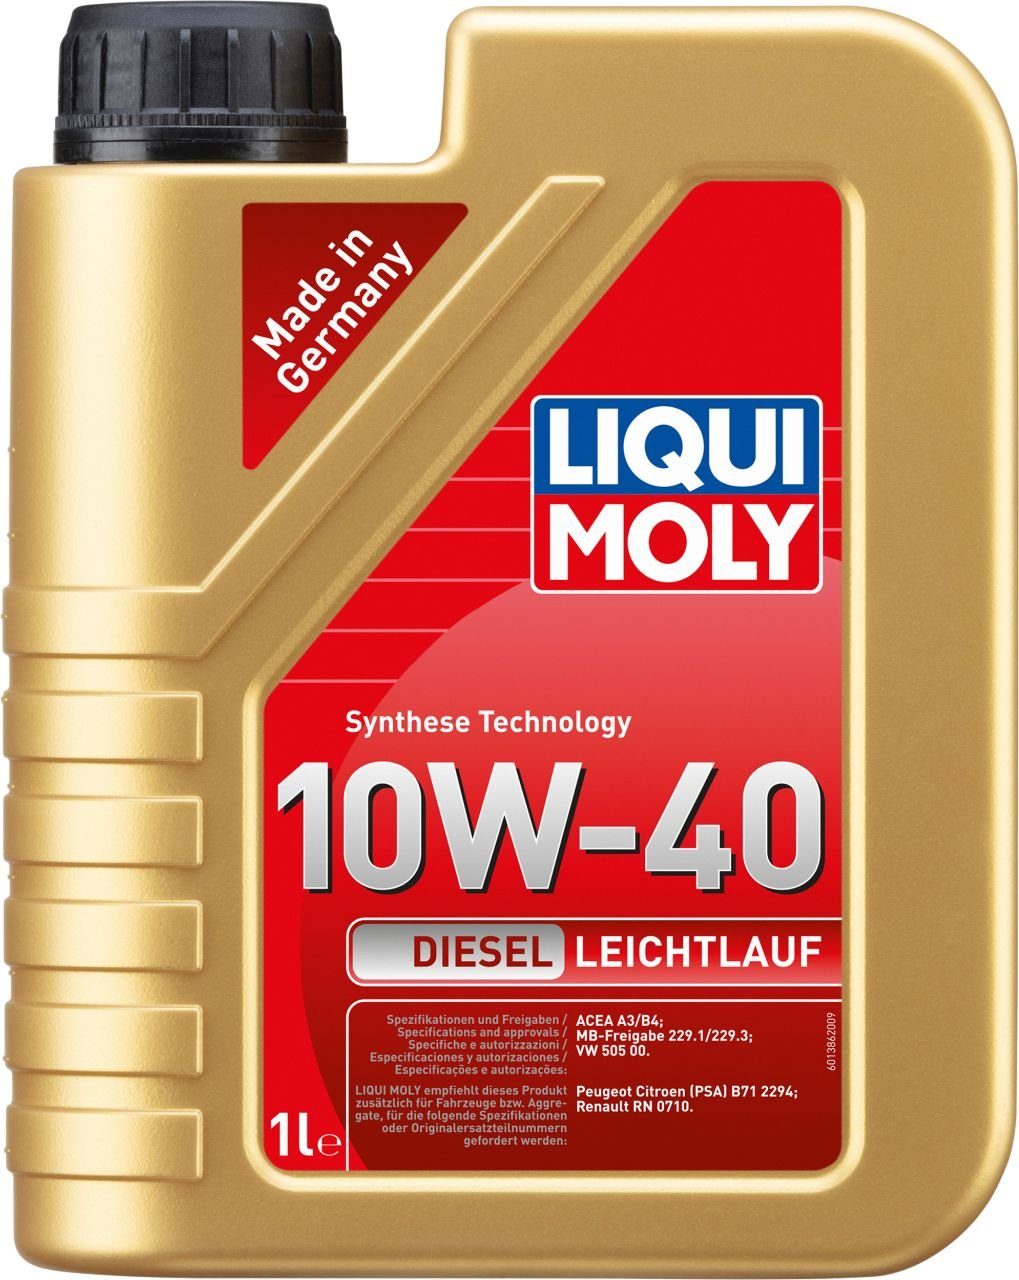 Liqui Moly Universalöl Liqui Moly Motoröl Diesel Leichtlauföl 10W-40 1 L